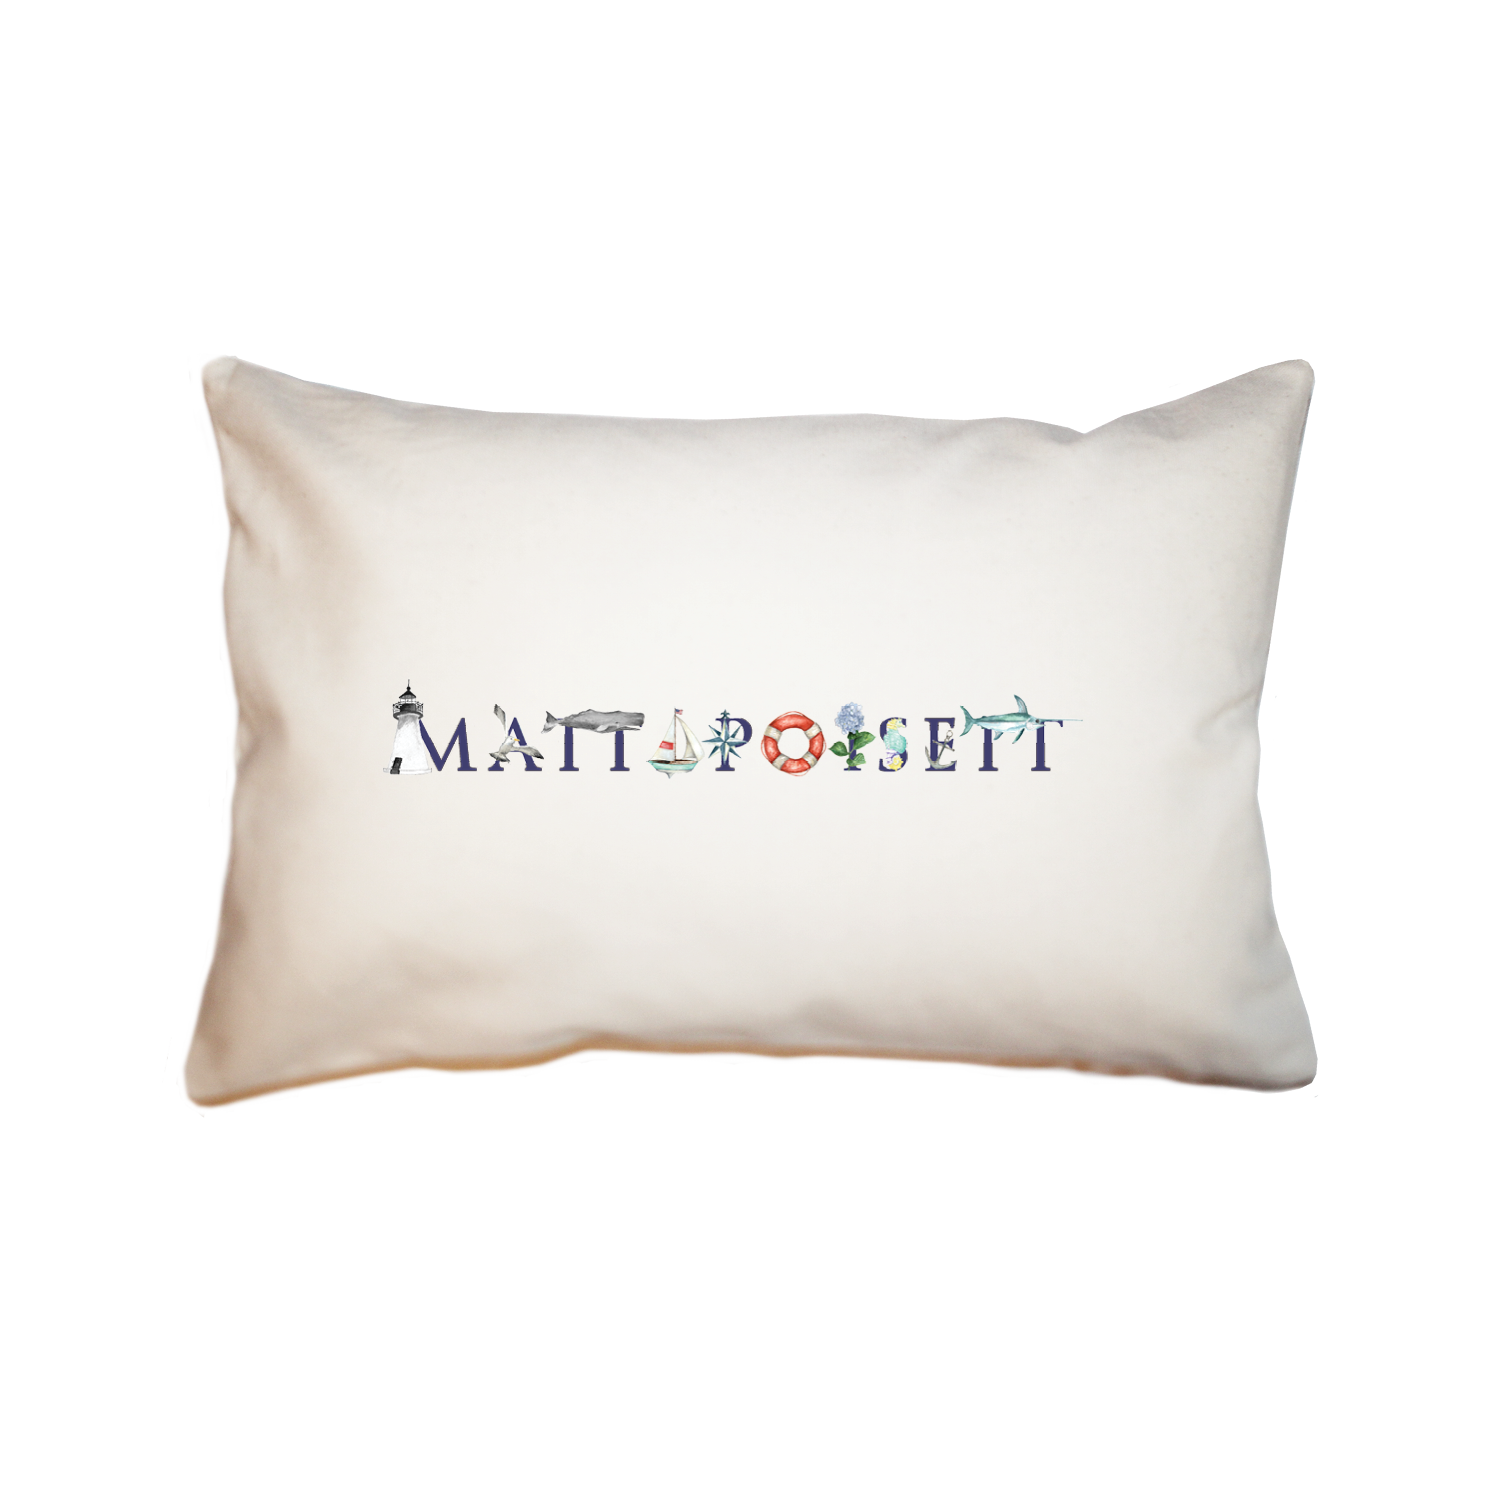 Mattapoisett large rectangle pillow